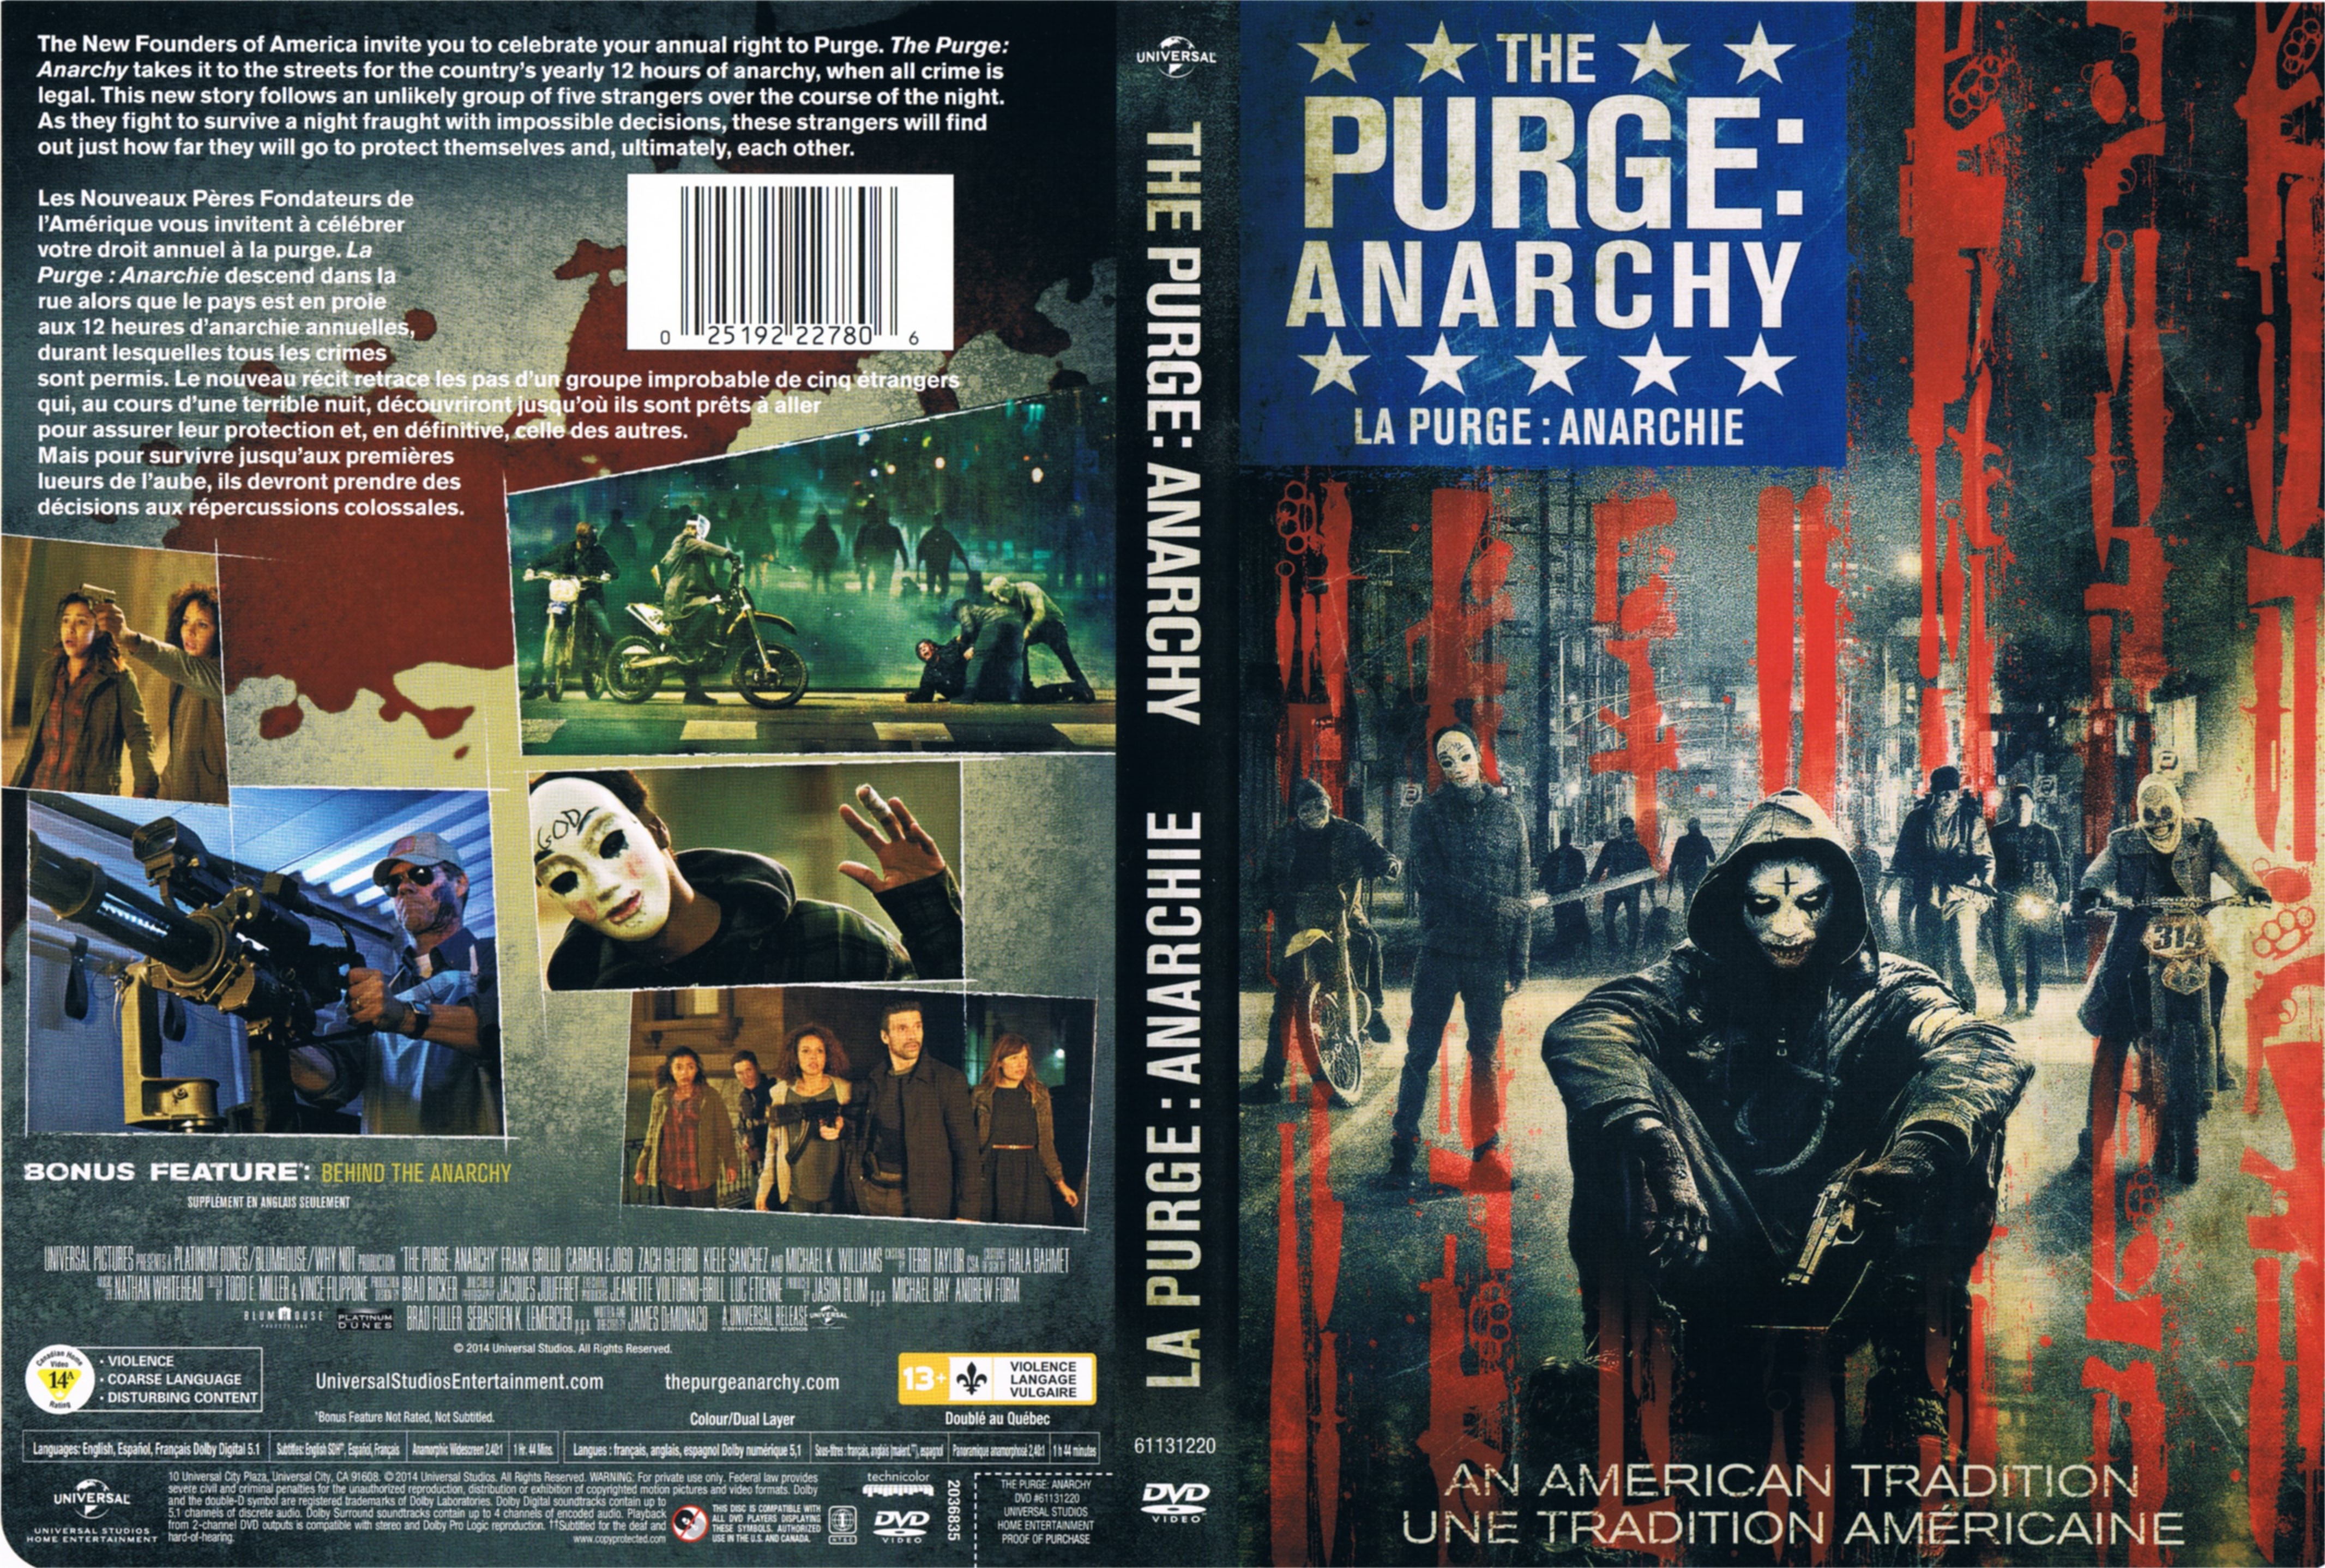 Jaquette DVD La purge Anarchie - The purge anarchy (Canadienne)